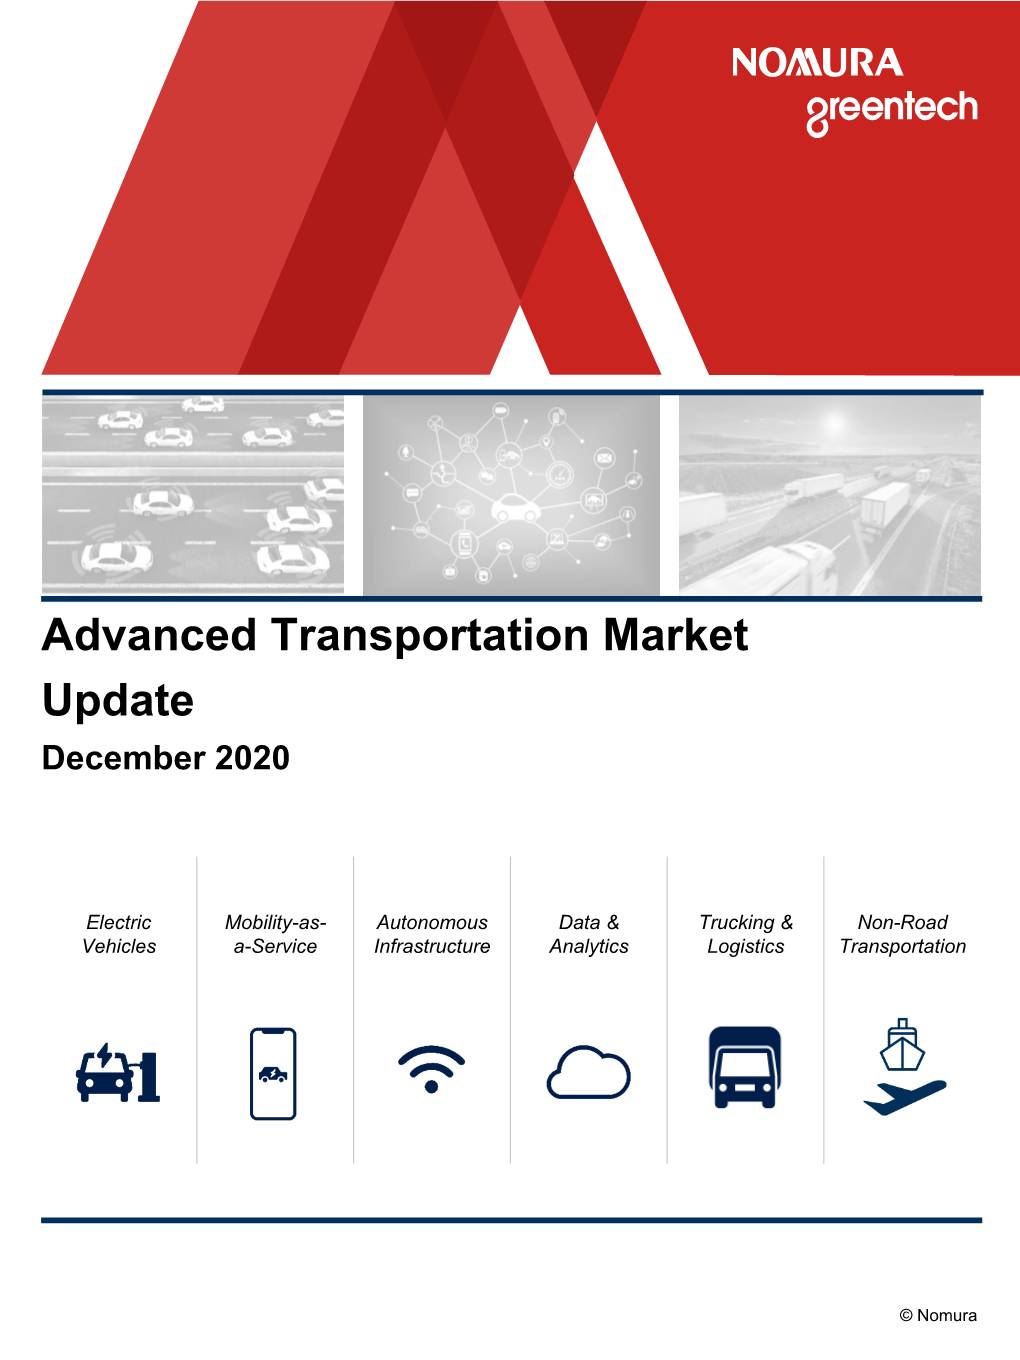 December 2020 Advanced Transportation Monthly Update